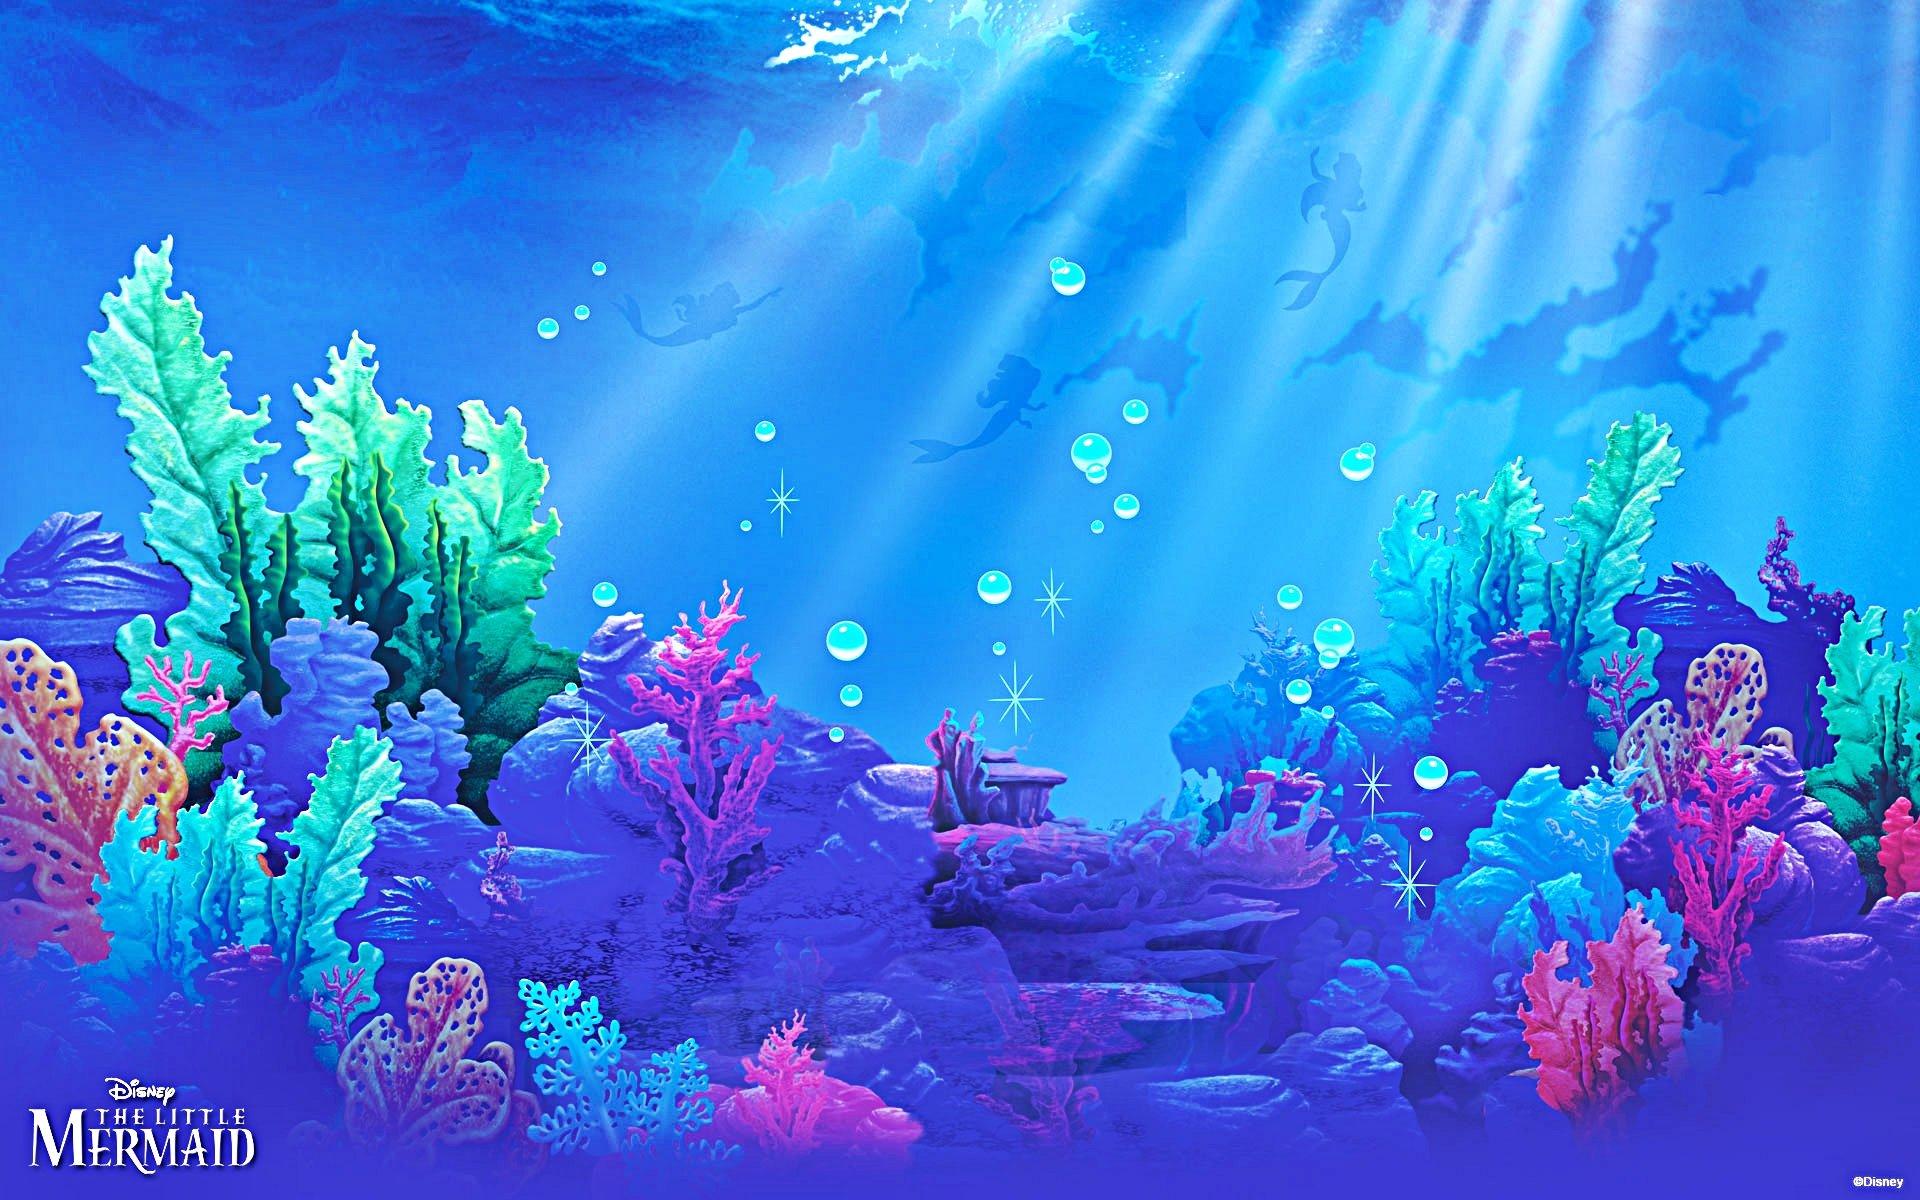 Little Mermaid wallpaper HD for desktop background